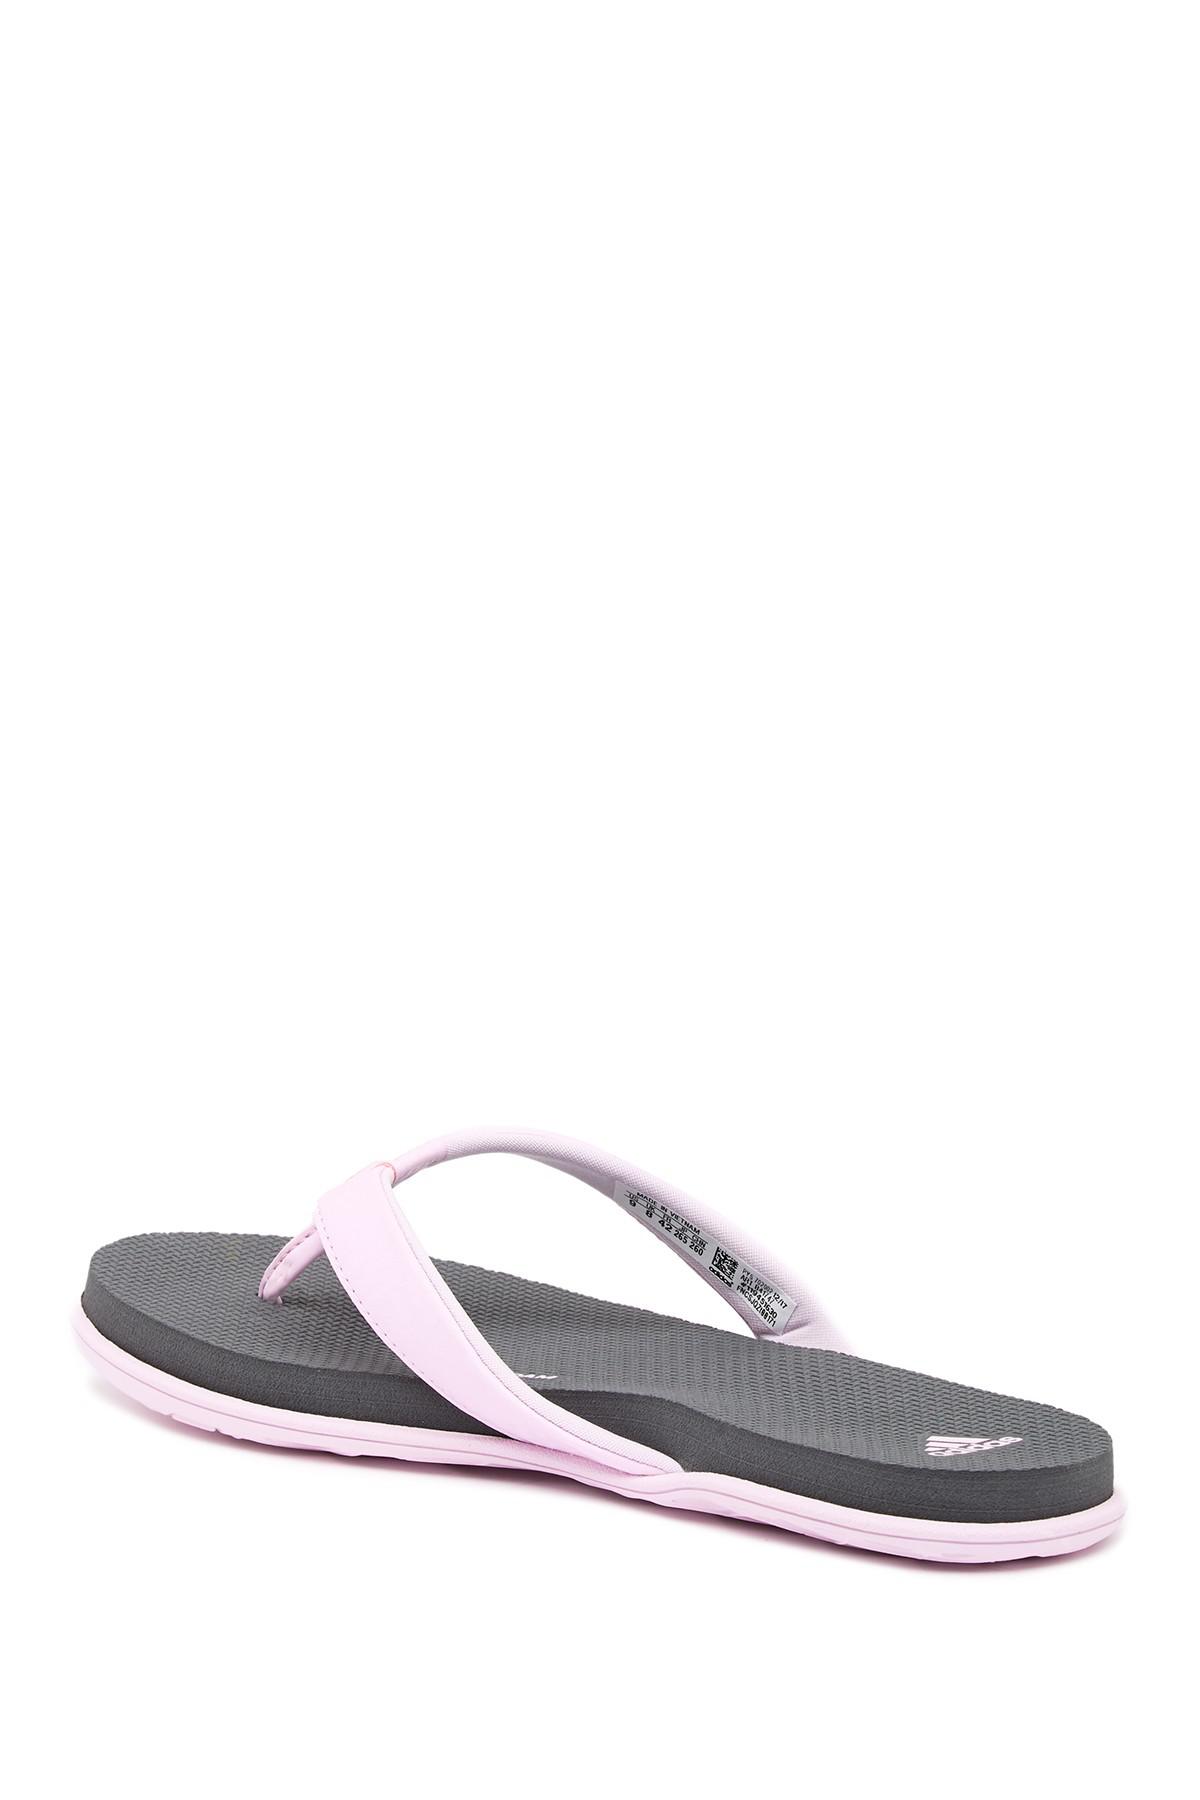 adidas Cloudfoam Flip Flop Sandal (women's) | Lyst